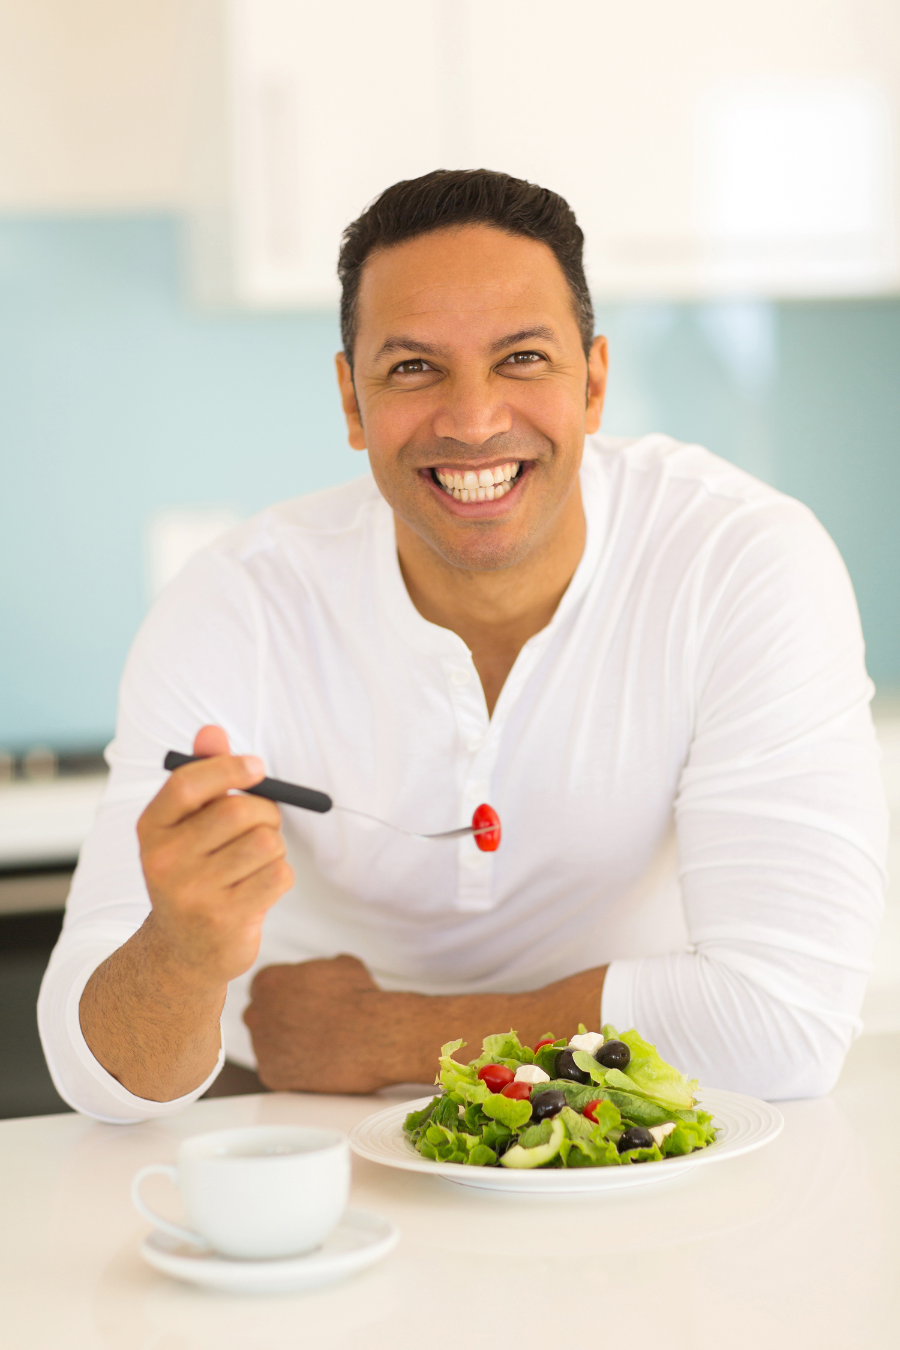 man eating a salad